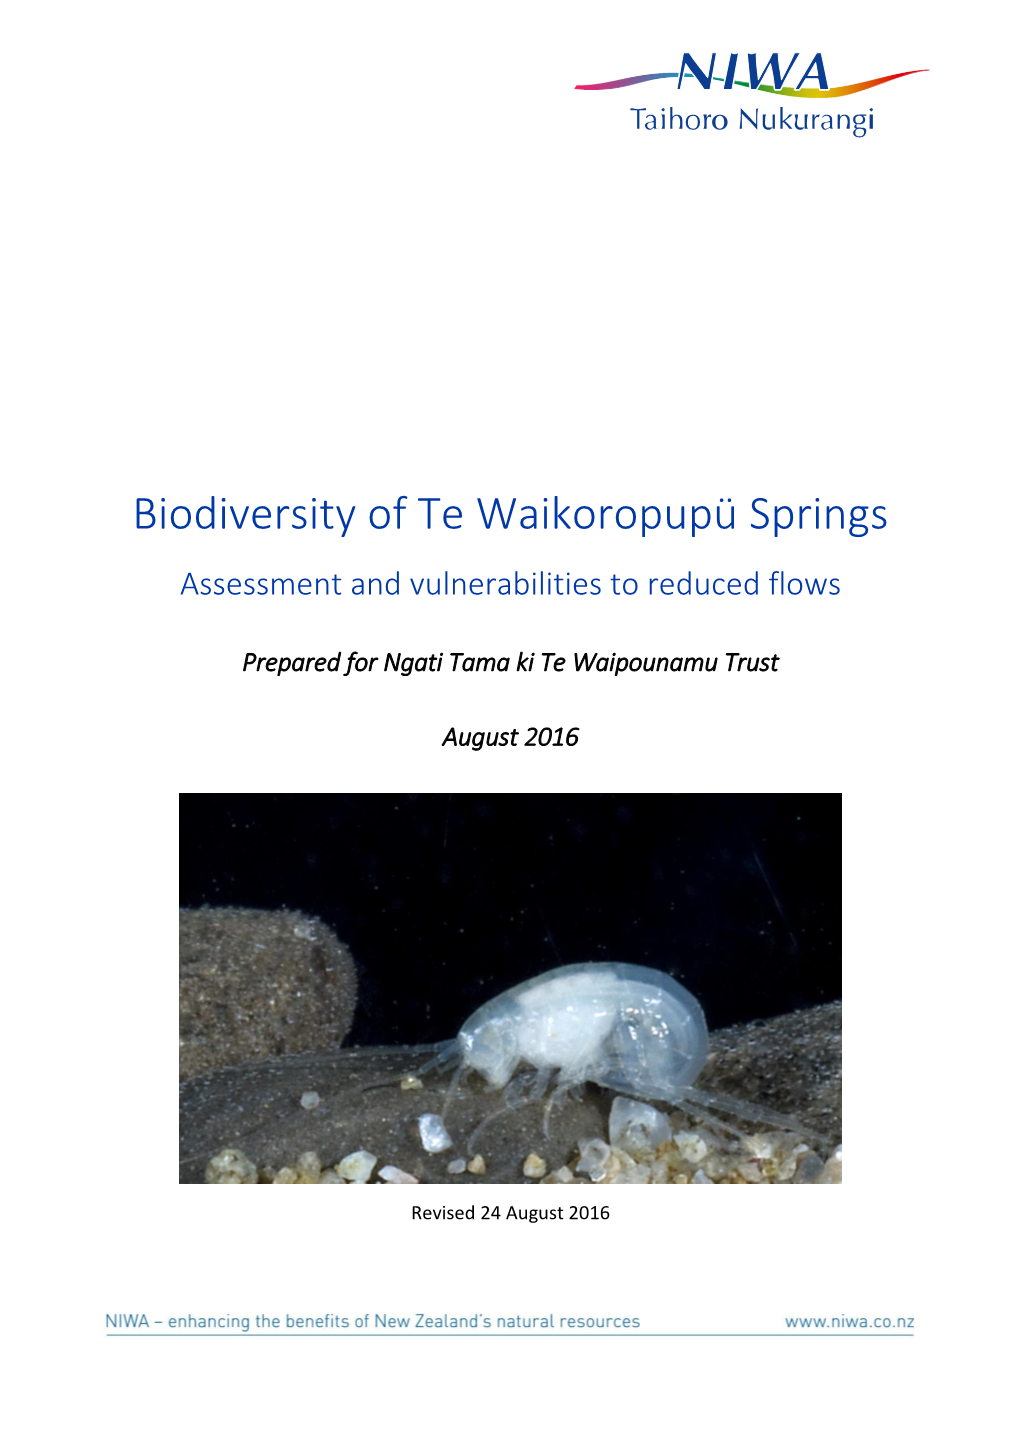 Biodiversity of Te Waikoropupü Springs Assessment and Vulnerabilities to Reduced Flows